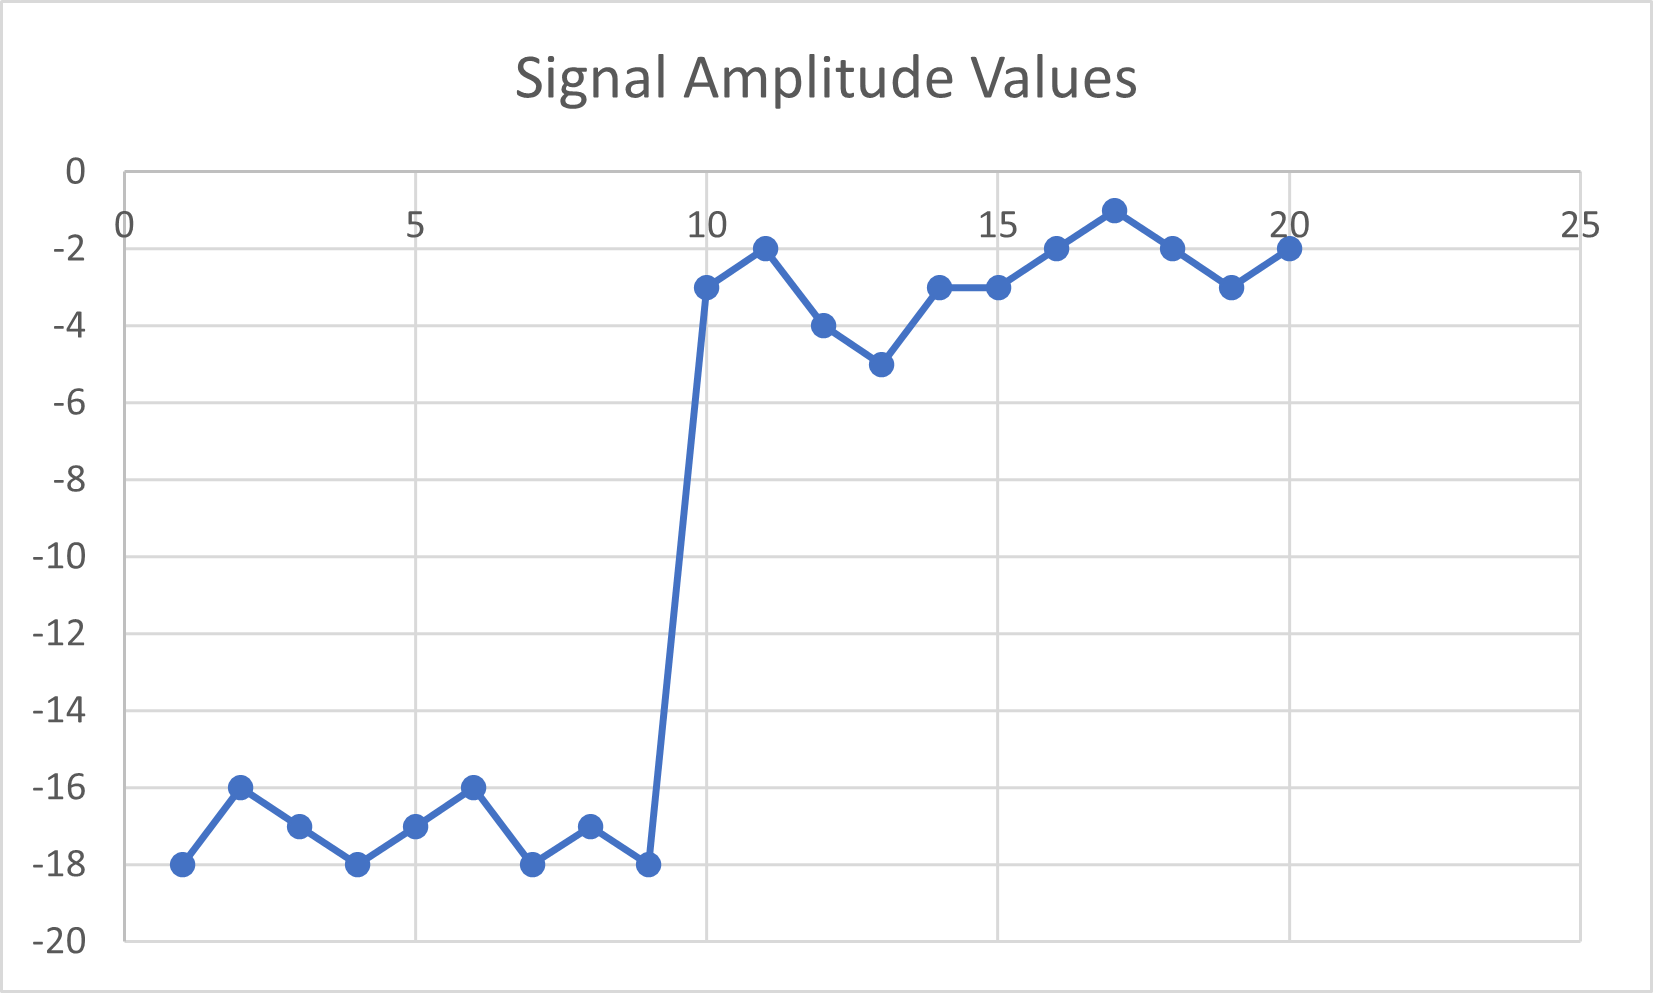 Amplitude values before normalizing